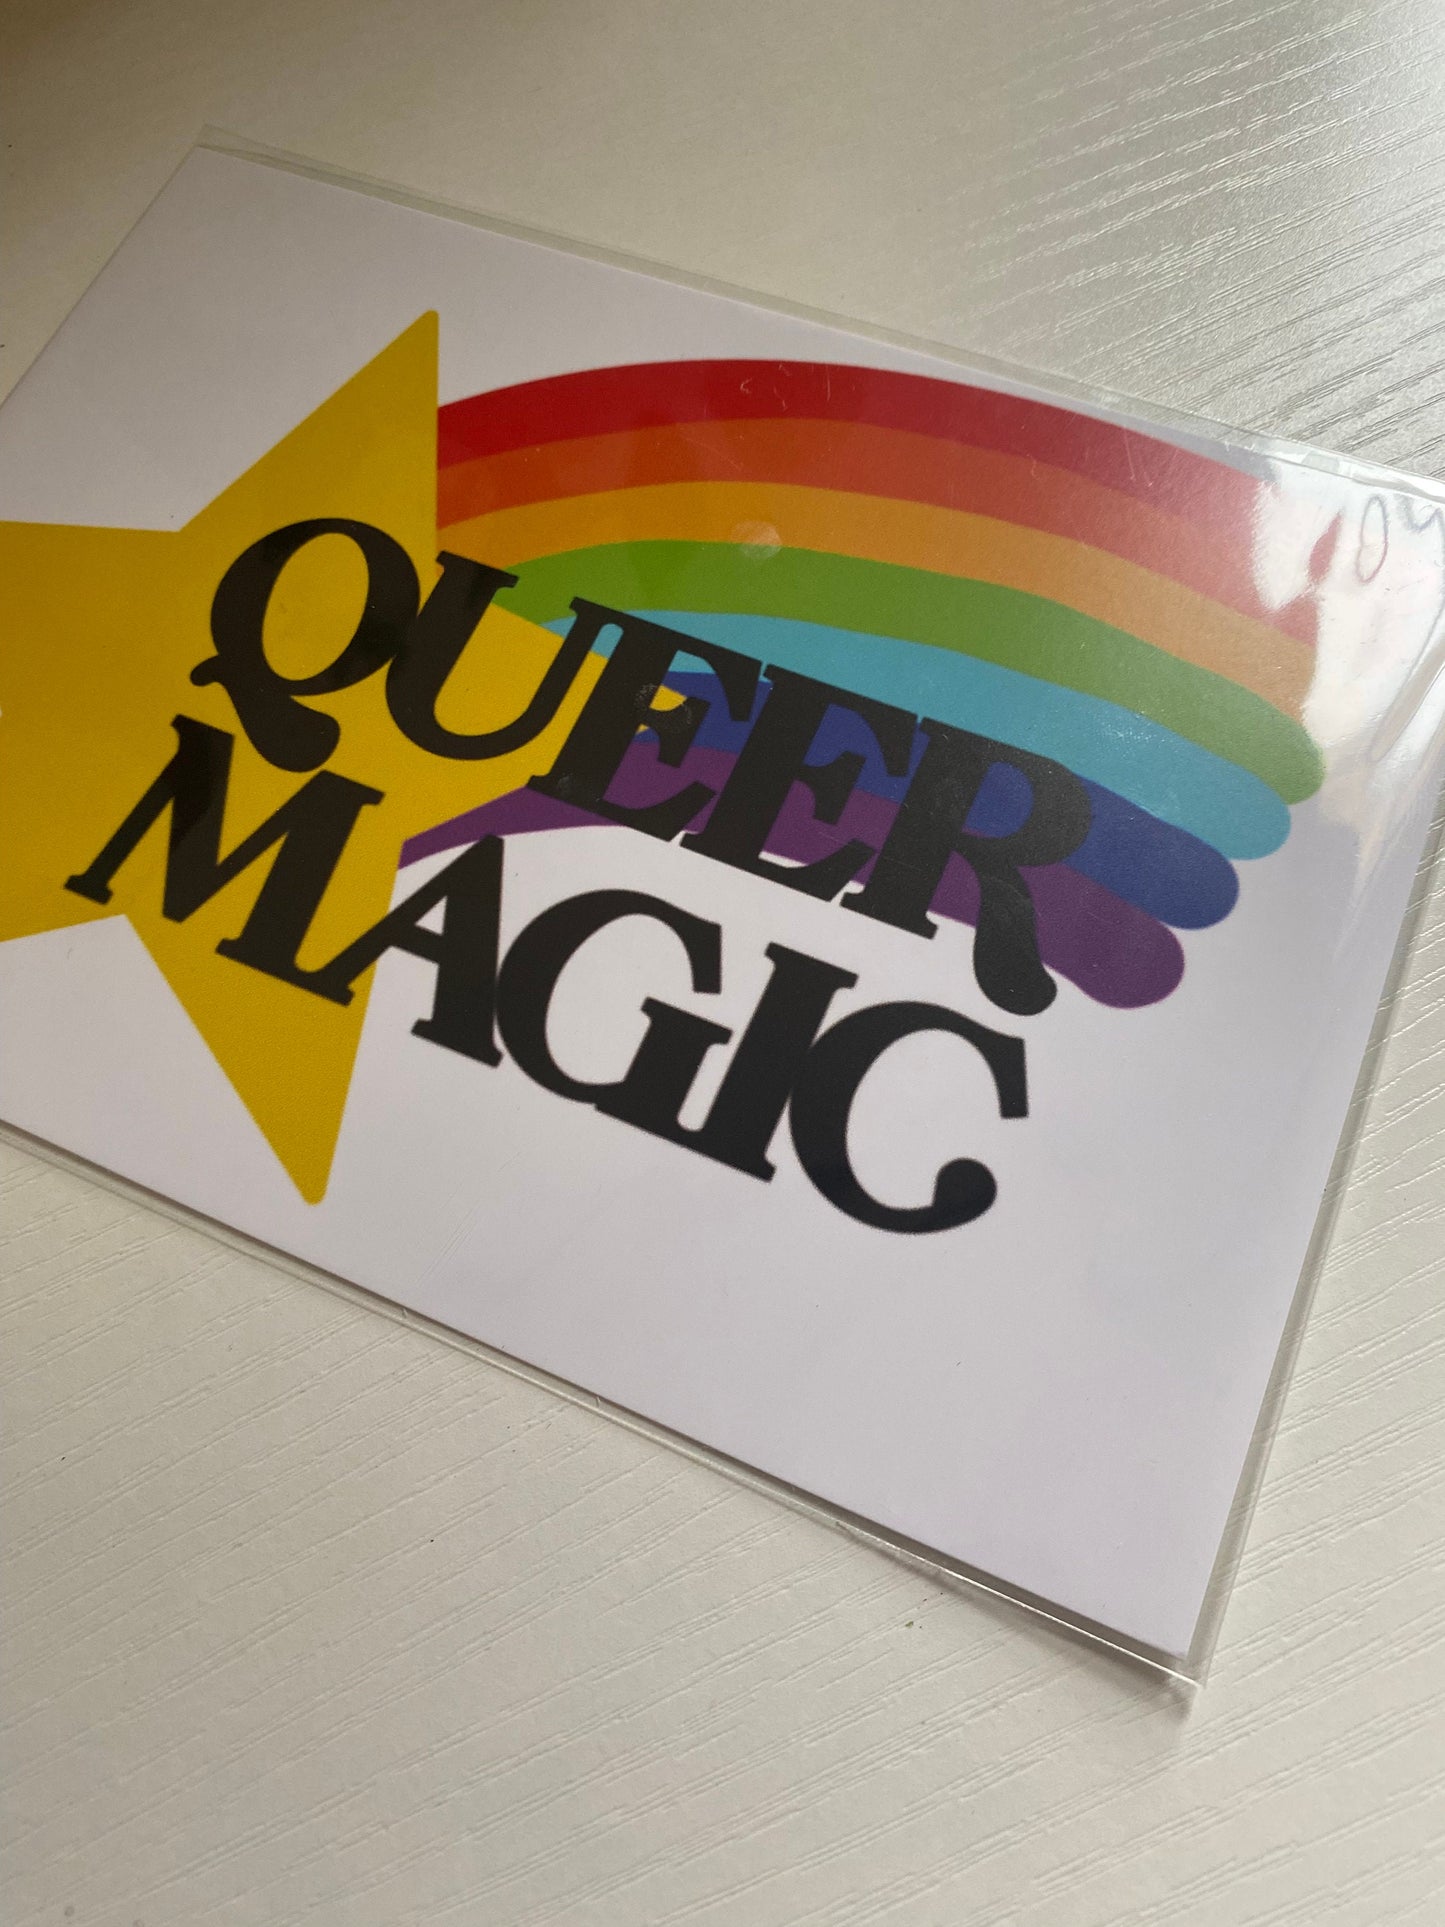 Queer Magic Art Print, LGBTQ Pride Art Print, Celebrate Pride Merch,  beautiful modern art print